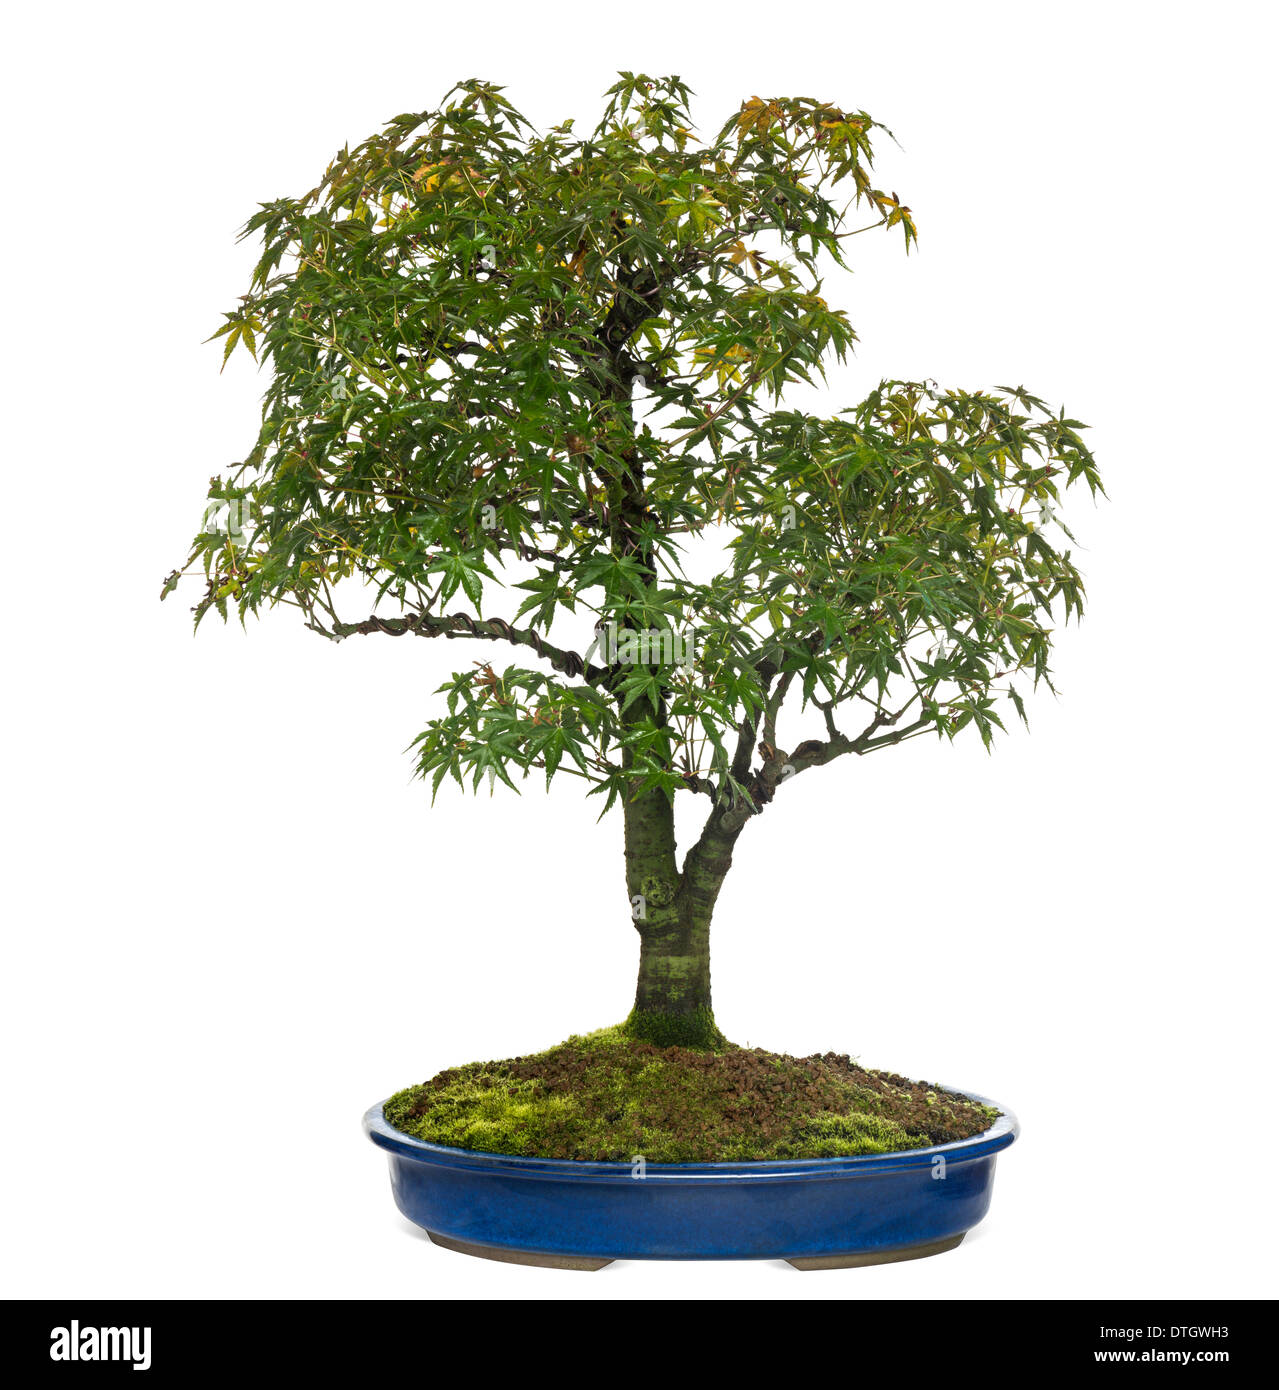 Acer bonsai tree, against white background Stock Photo